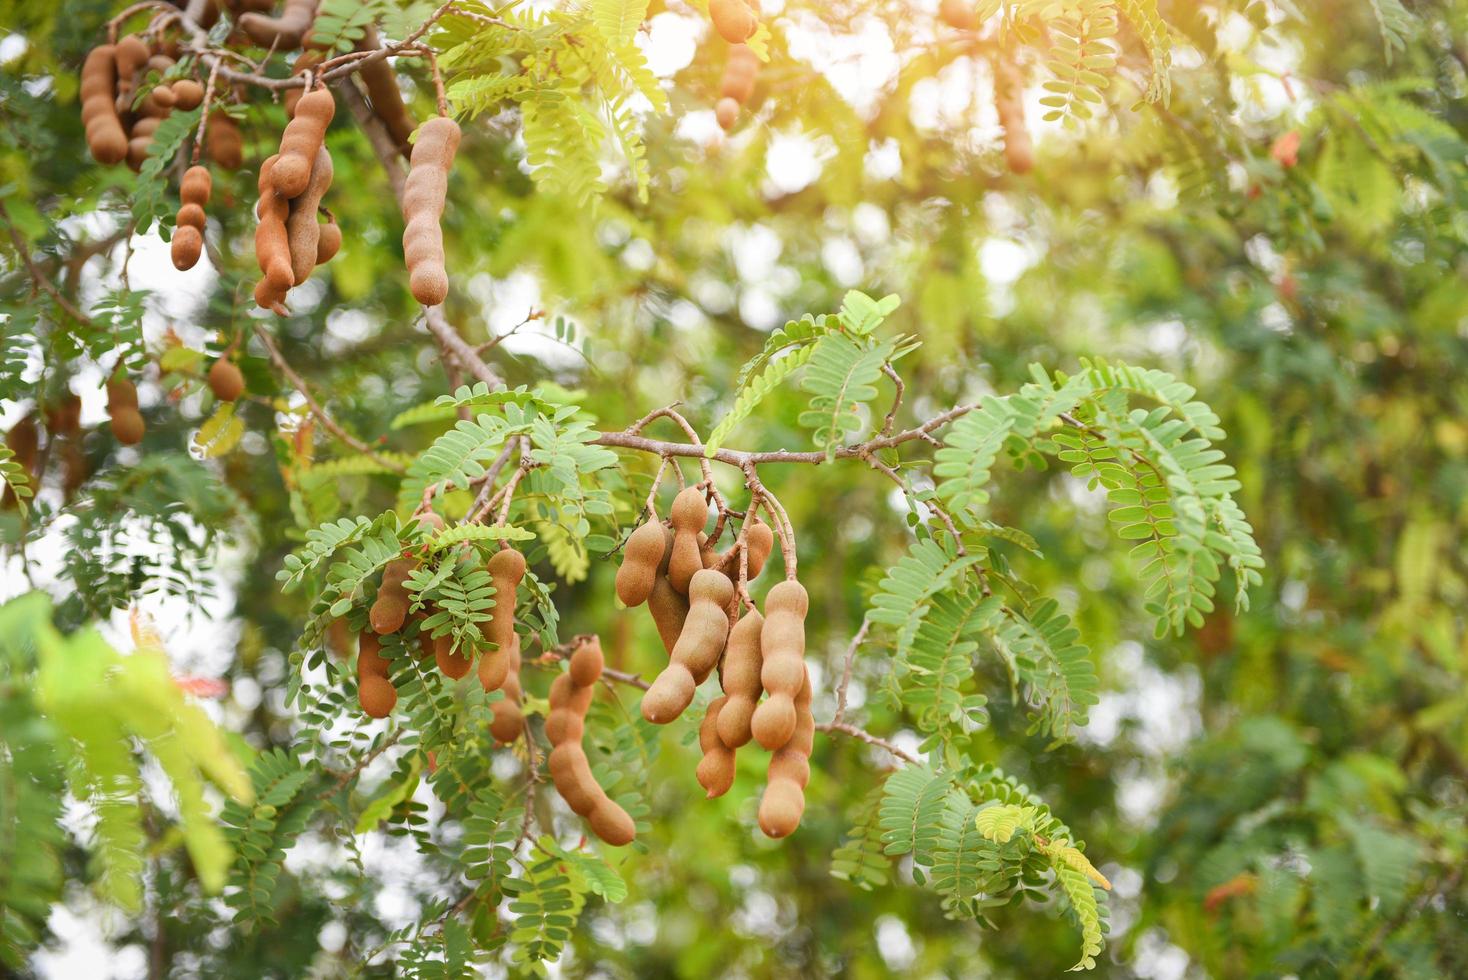 tamarind träd tropisk frukt - mogen tamarind på träd med löv i sommar bakgrund foto